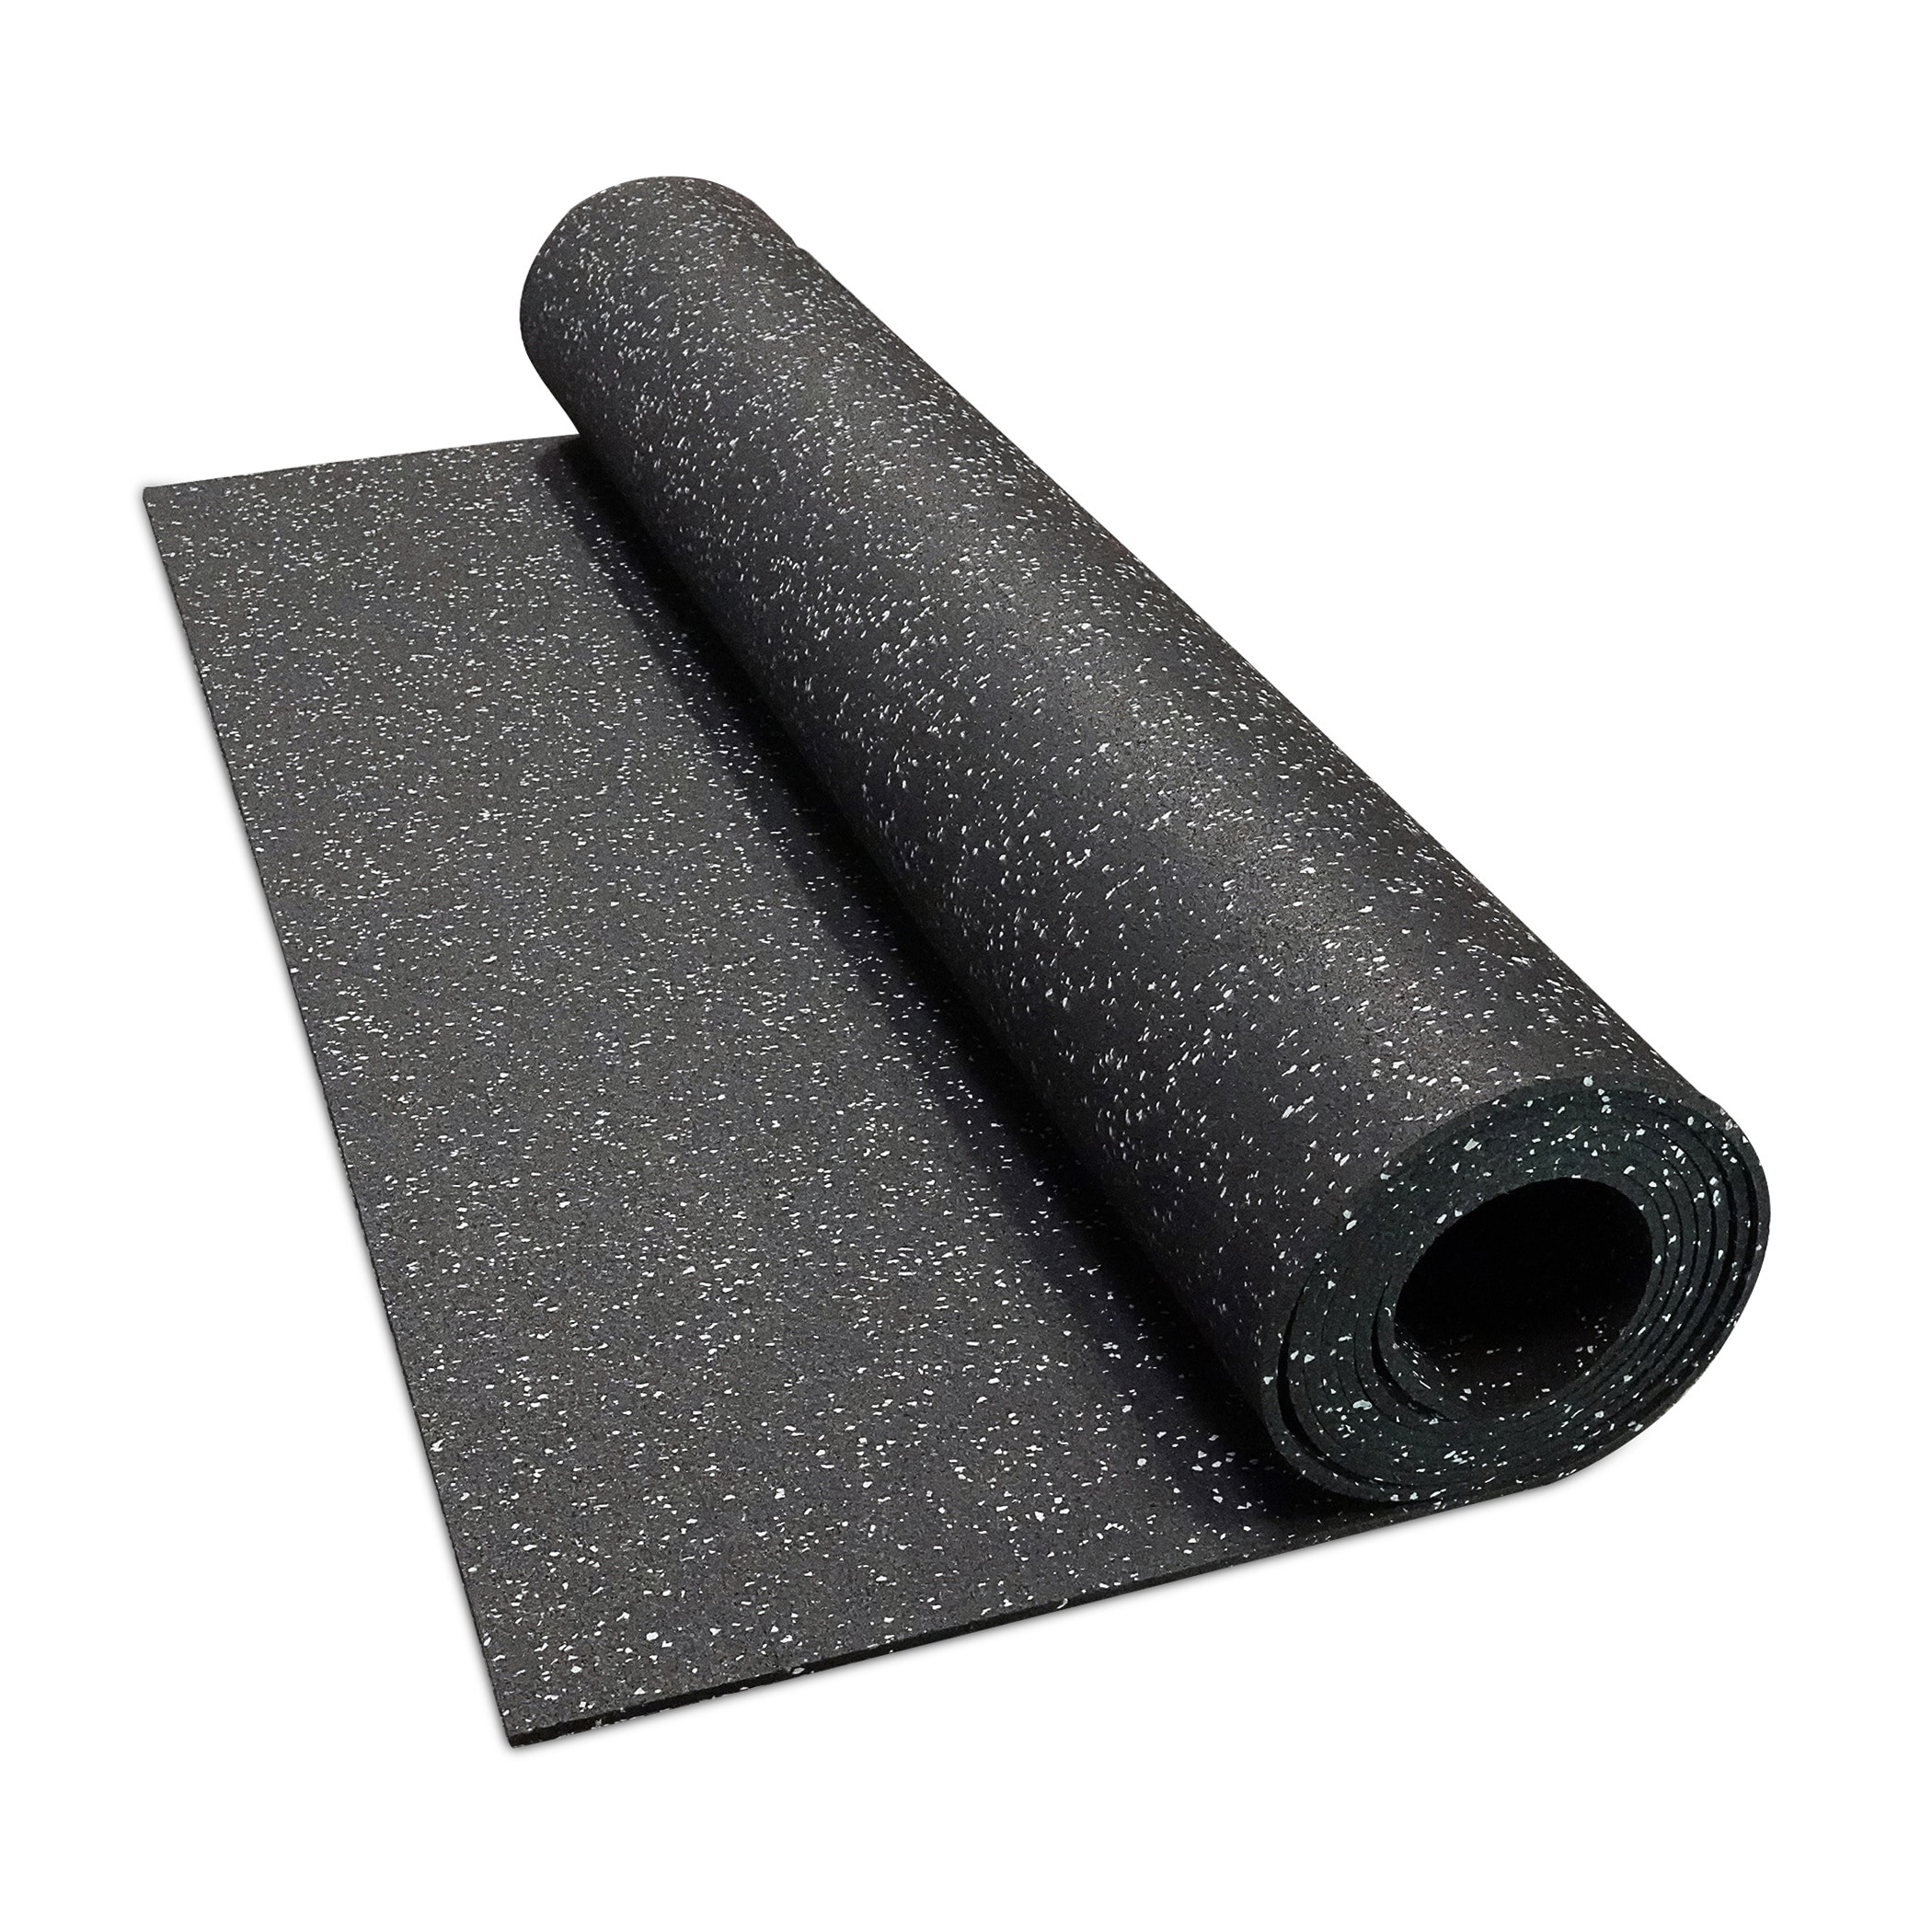 2023 Most Popular Seamless Splicing Long Life Gym Floor Mat Rubber - China  Rubber Fitness Flooring, Gym Mats Rubber Flooring